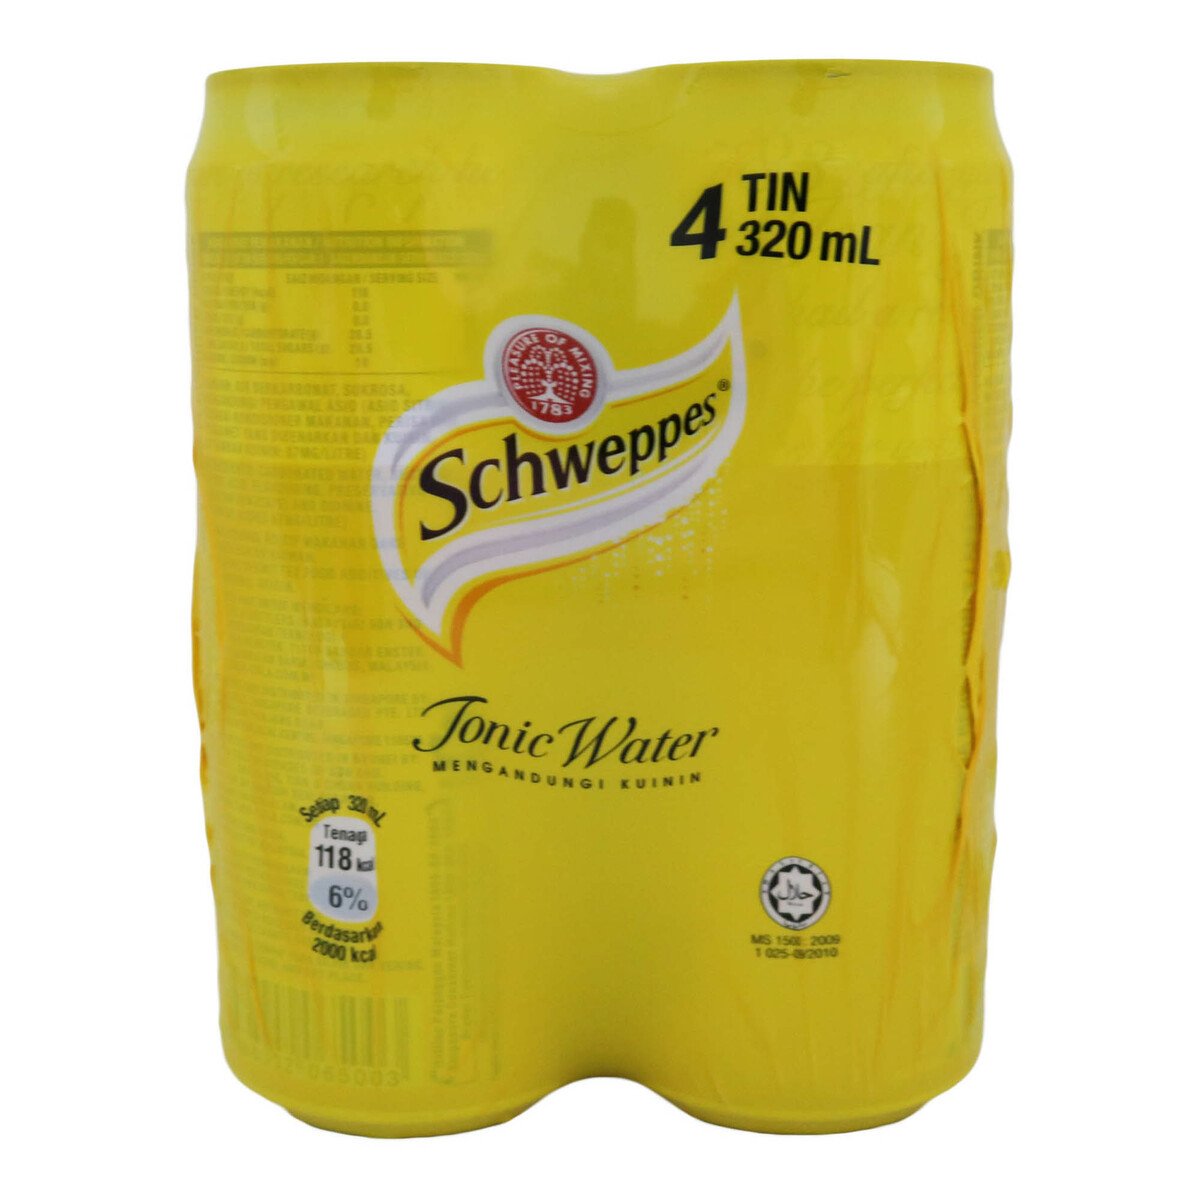 Schweppes Tonic Water 4 x 320ml